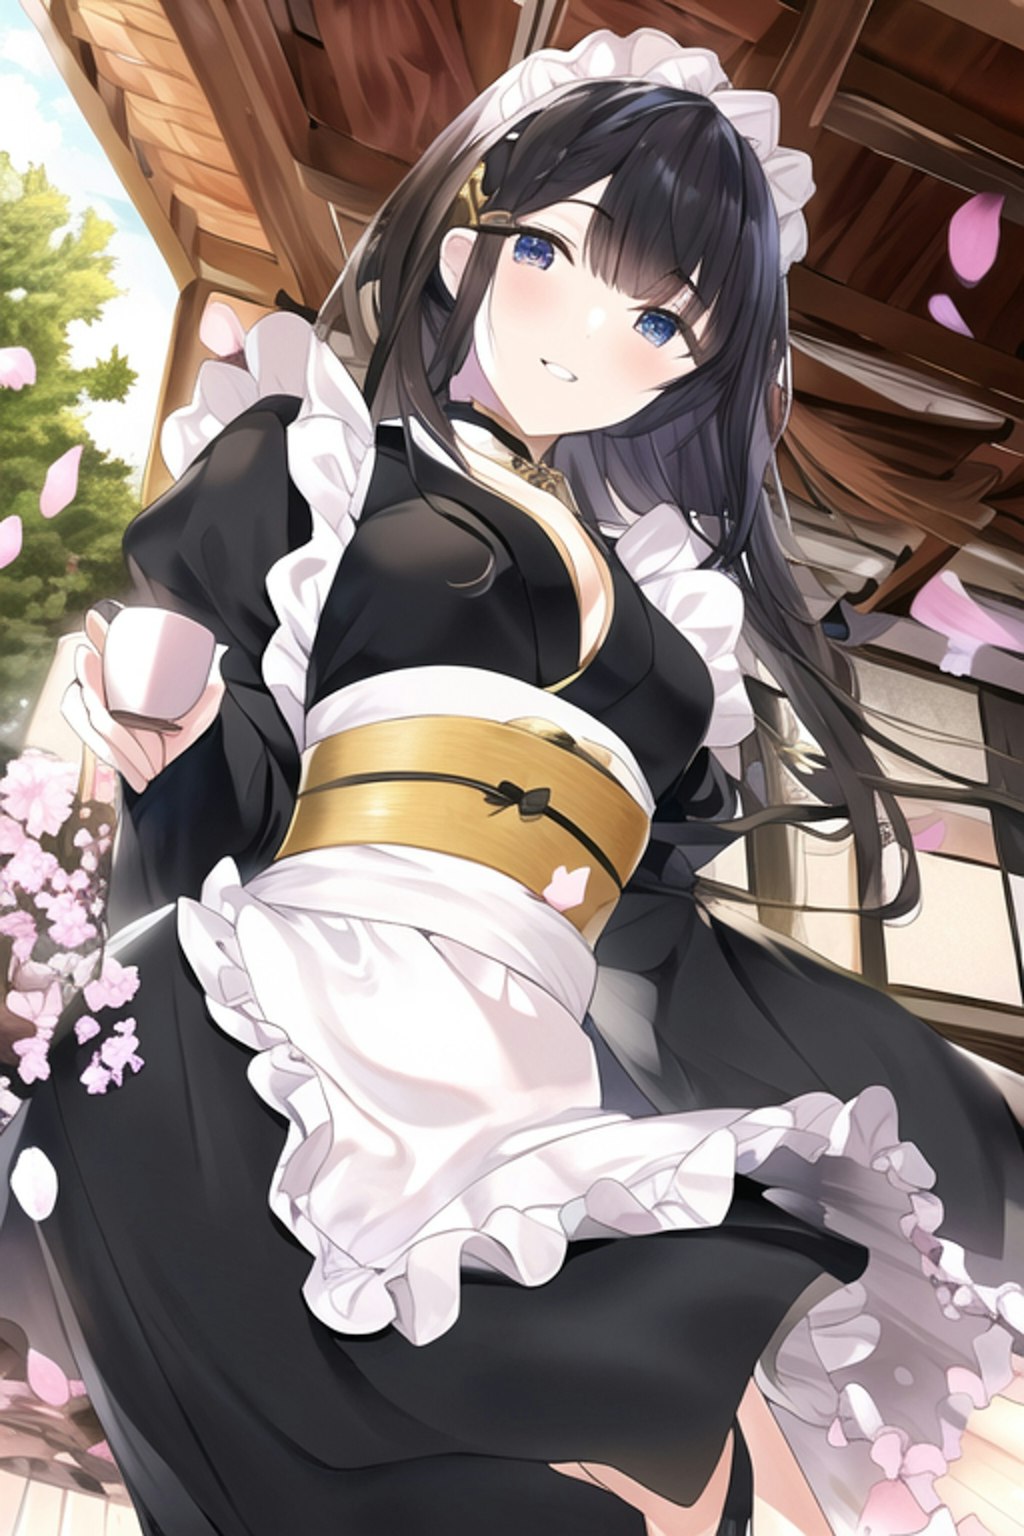 Japanese-style maid